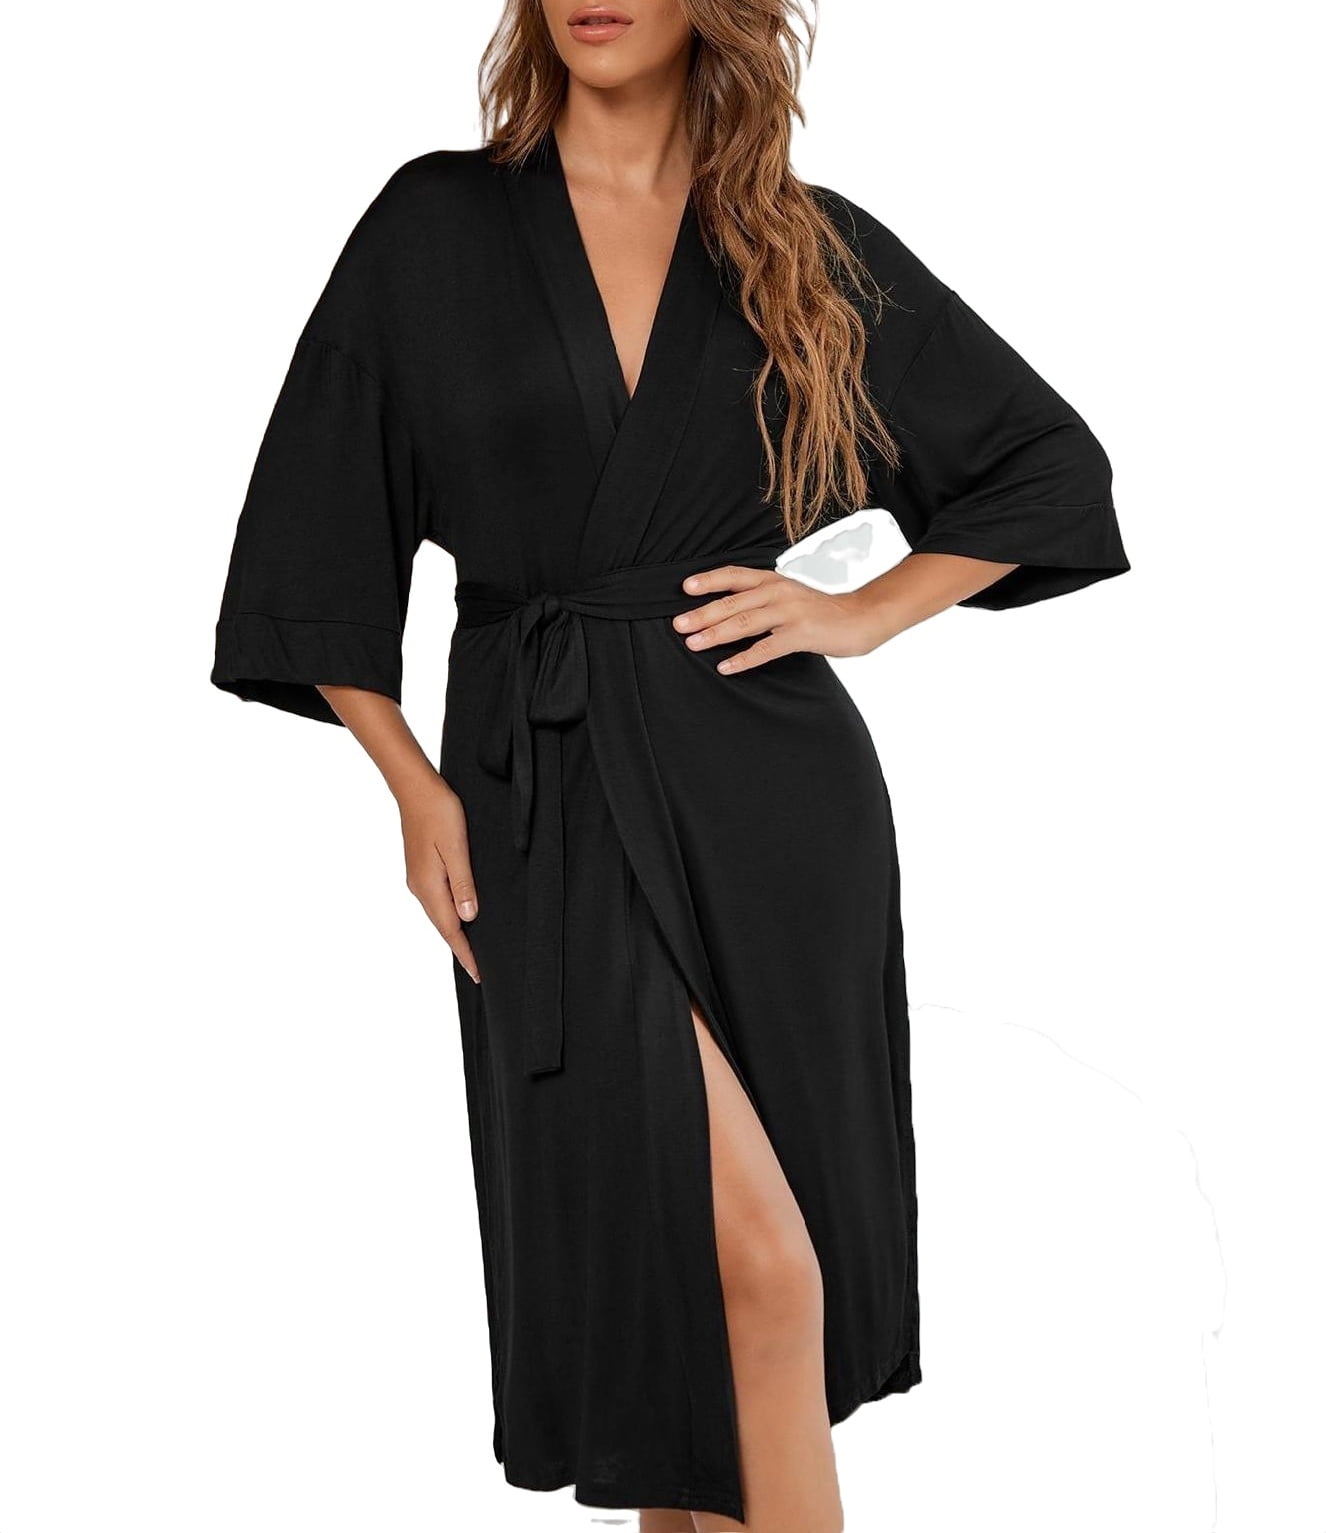 Casual 3/4 Sleeve Black Women's Lounge Robes (Women's) - Walmart.com